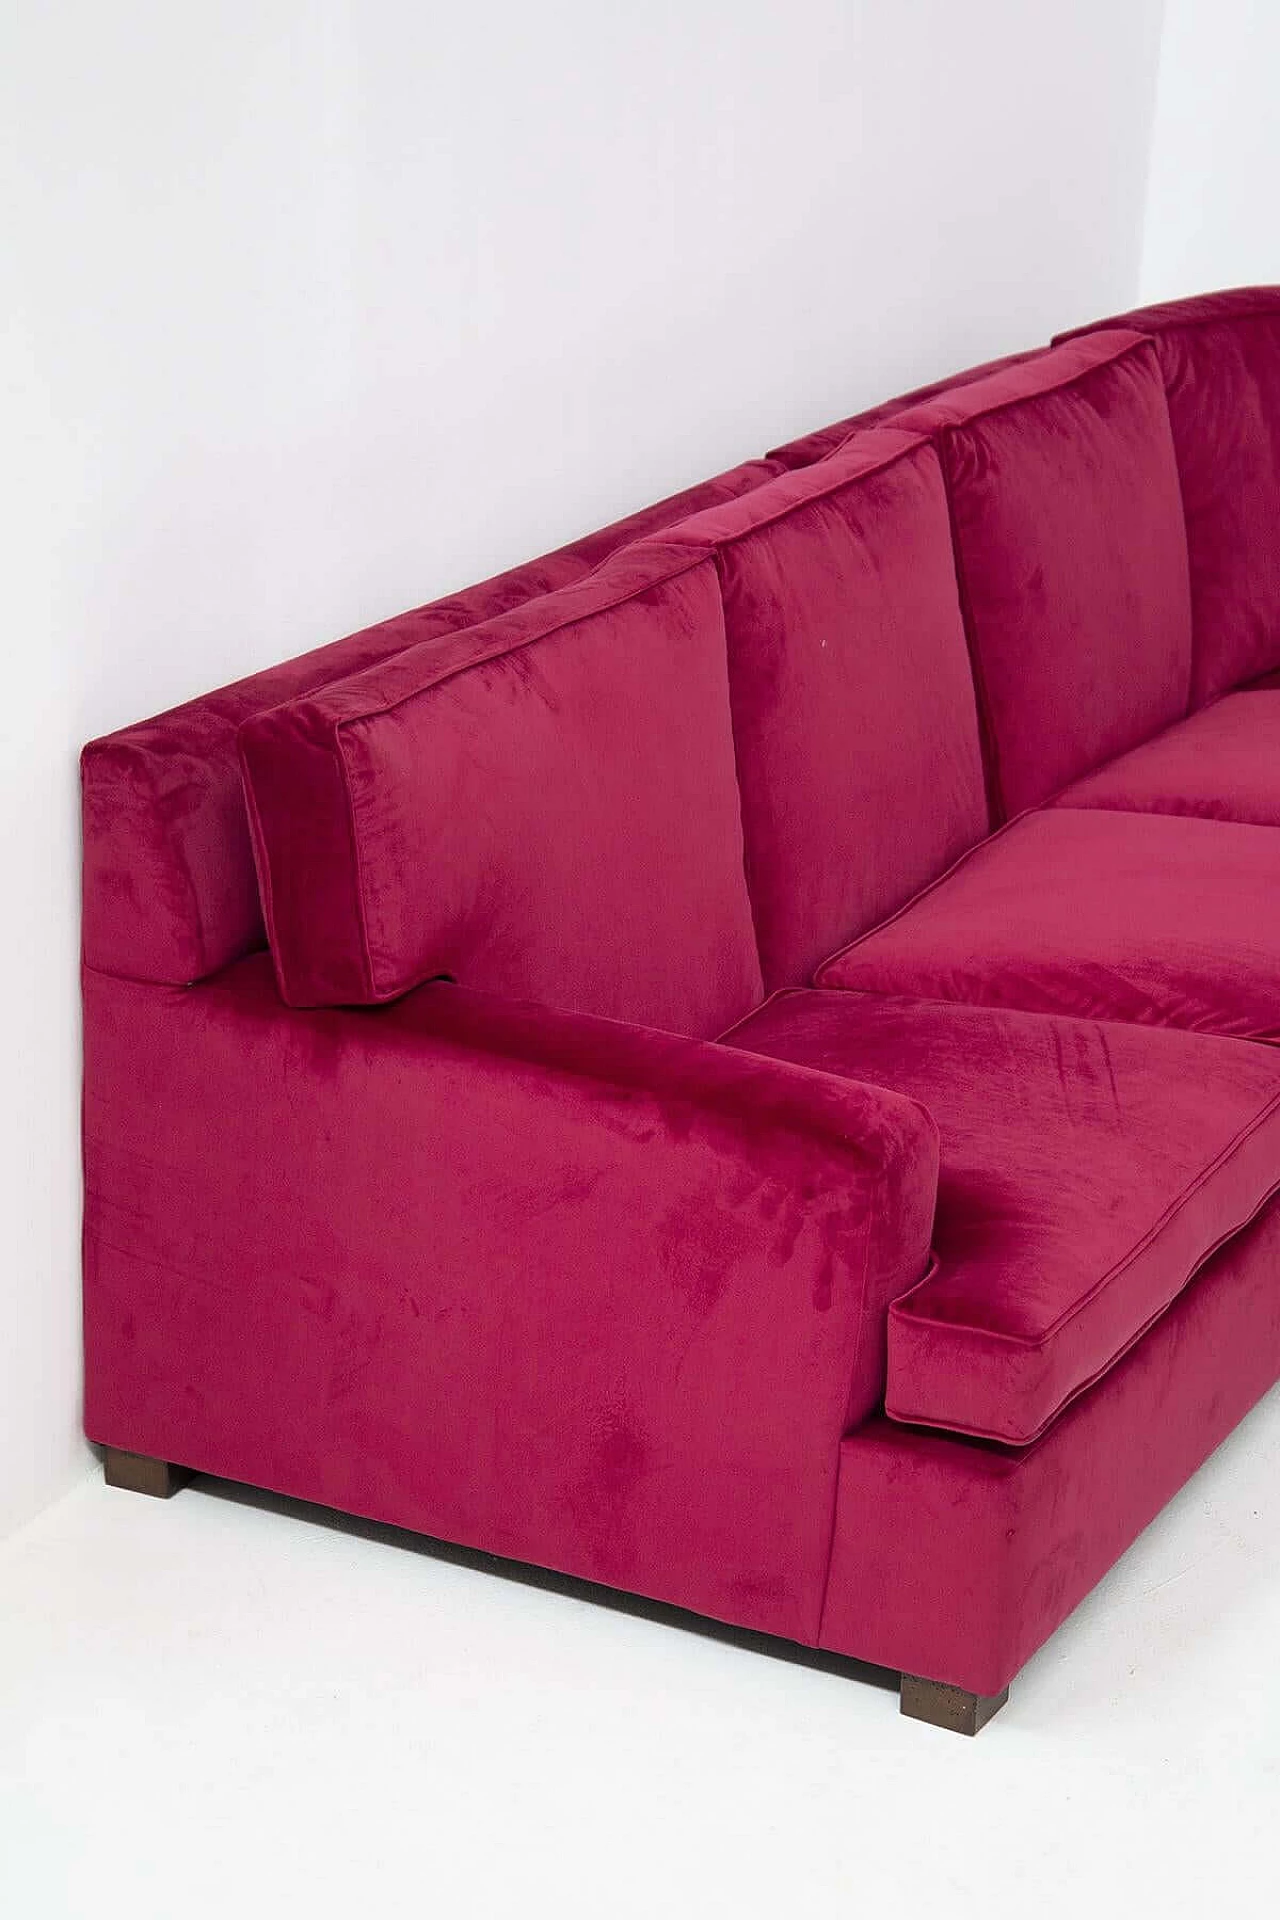 12-seater modular sofa attr. to Luigi Caccia Dominioni in dark fuchsia velvet, 1960s 1403103